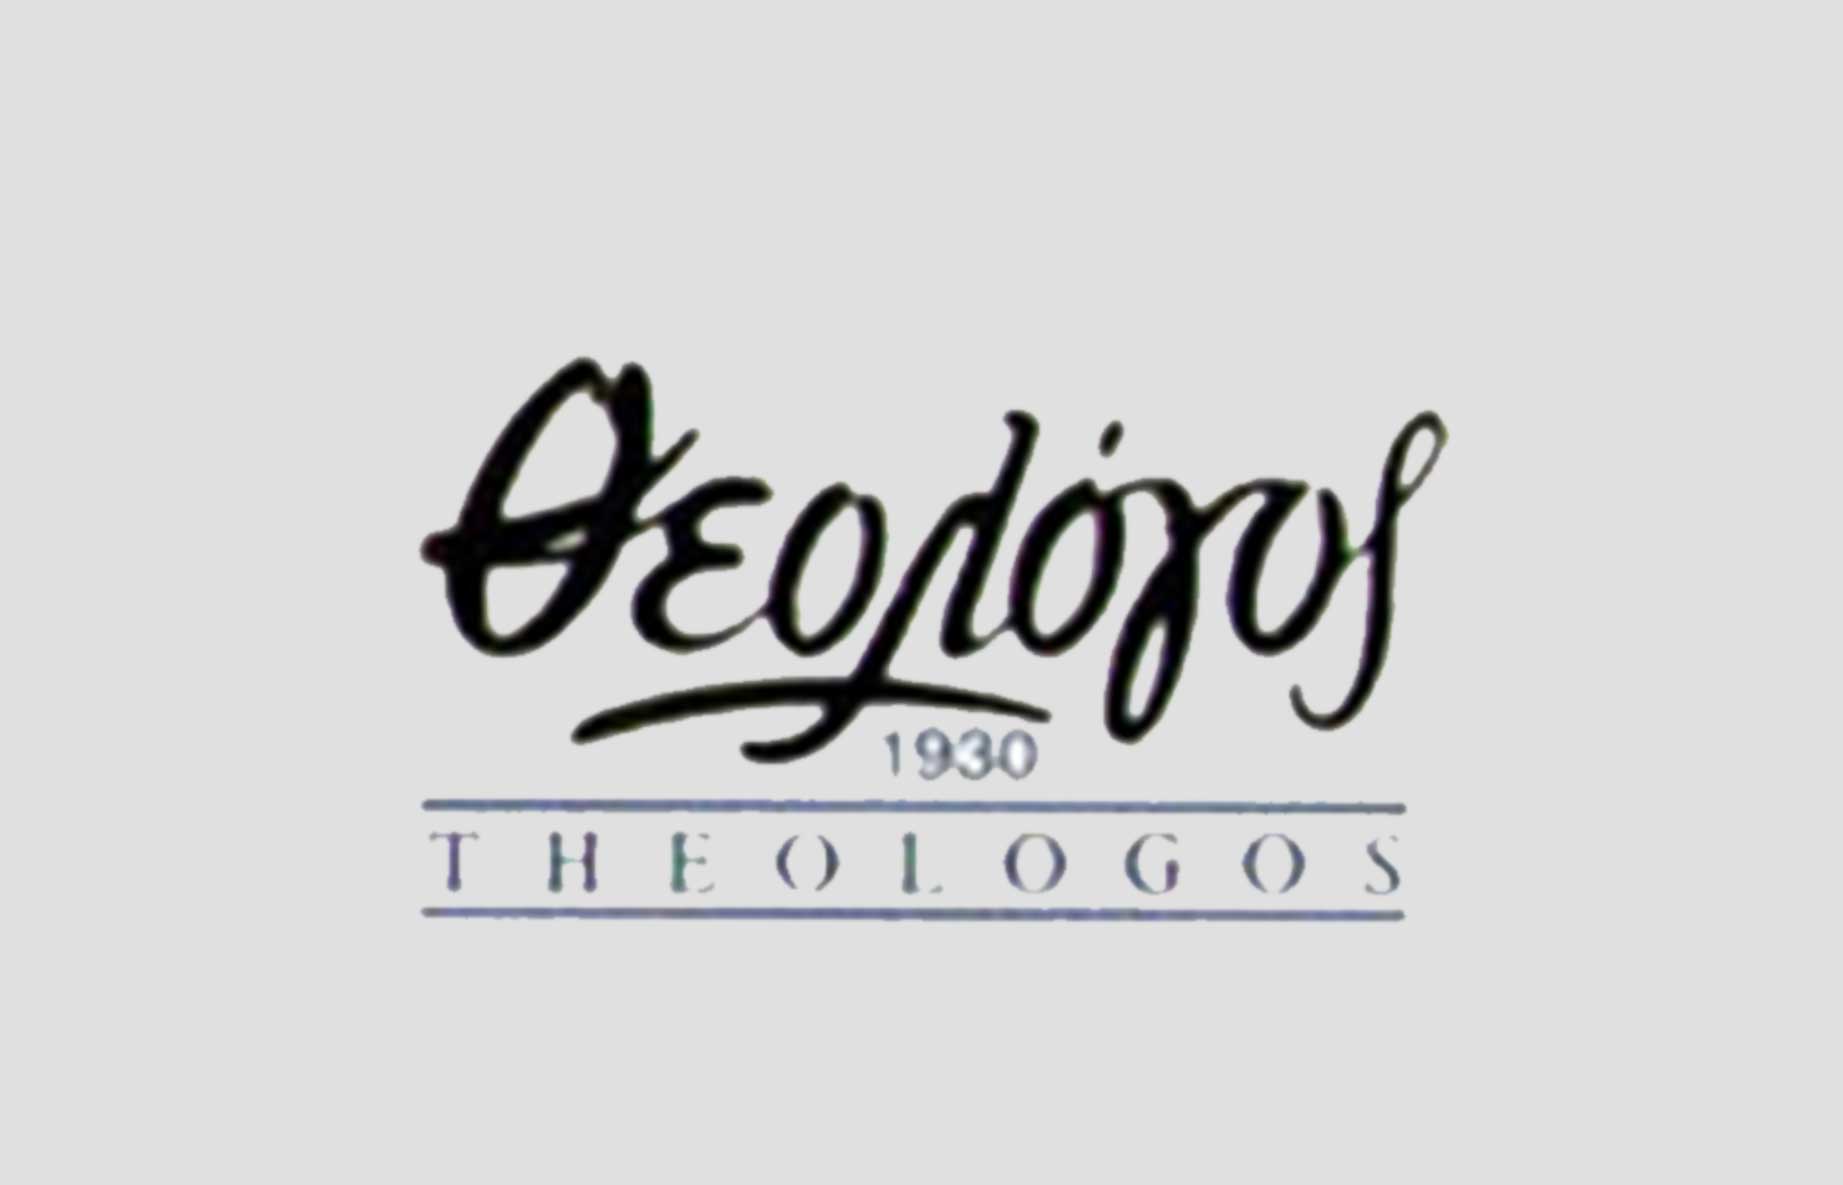 Theologos